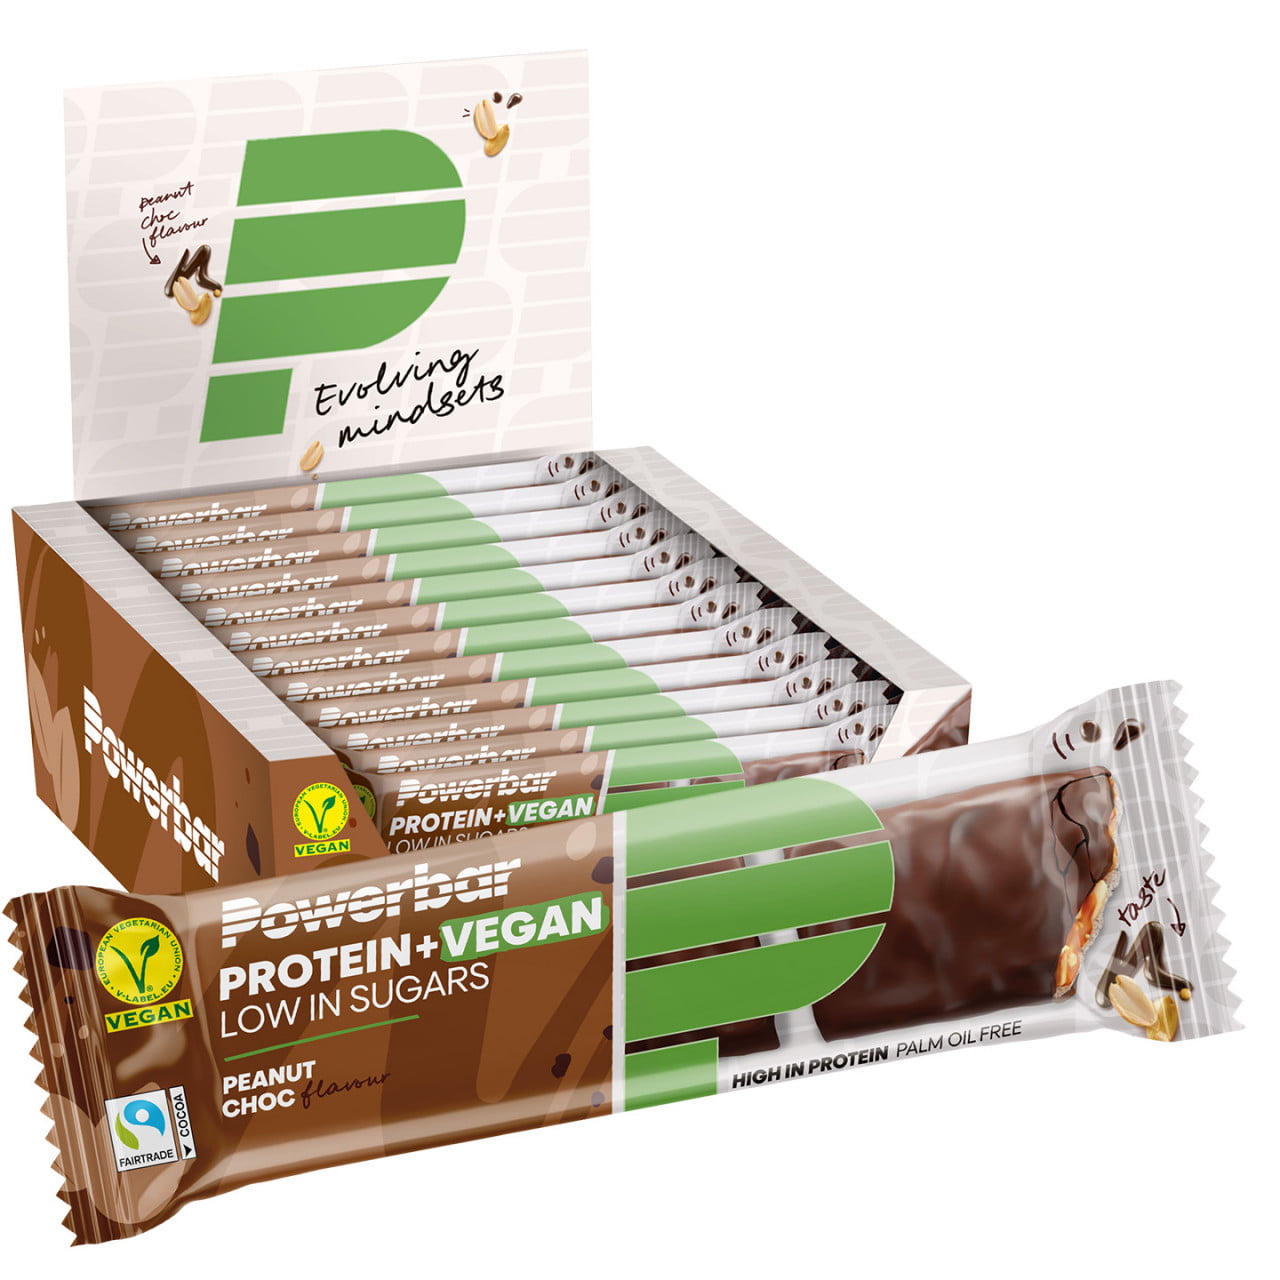 Protein+ vegan Low in Sugars Peanut Chocolate 12 St.